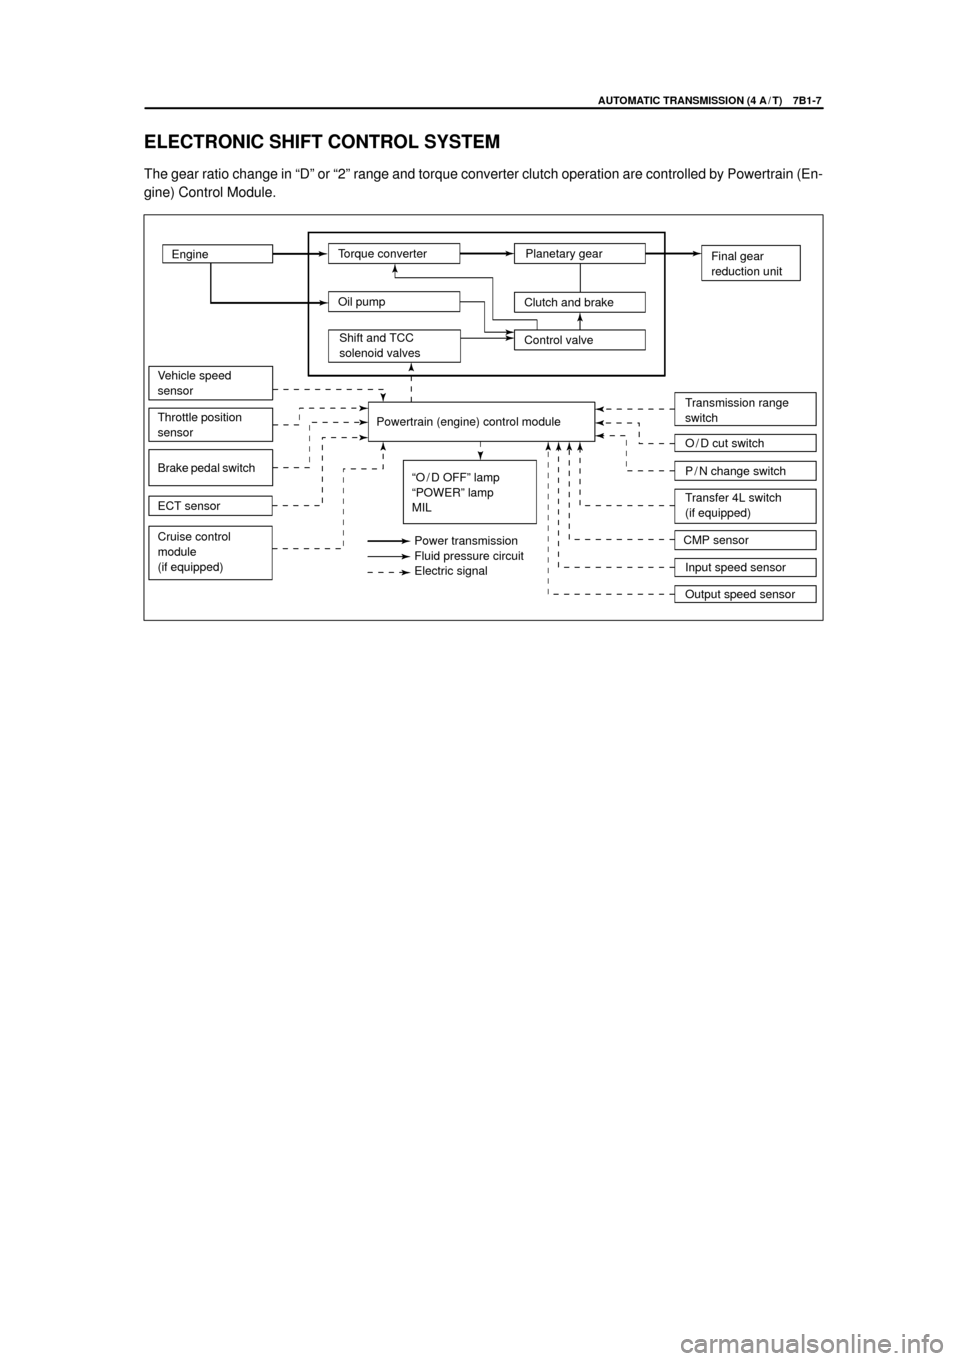 SUZUKI GRAND VITARA 2004 2.G Service Owners Guide YH4
GRAND
VITARA
Engine
Vehicle speed
sensor
Throttle position 
sensor
ECT sensor
Cruise control
module
(if equipped)Torque converter Planetary gear
Final gear
reduction unit
Oil pump
Shift and TCC
so